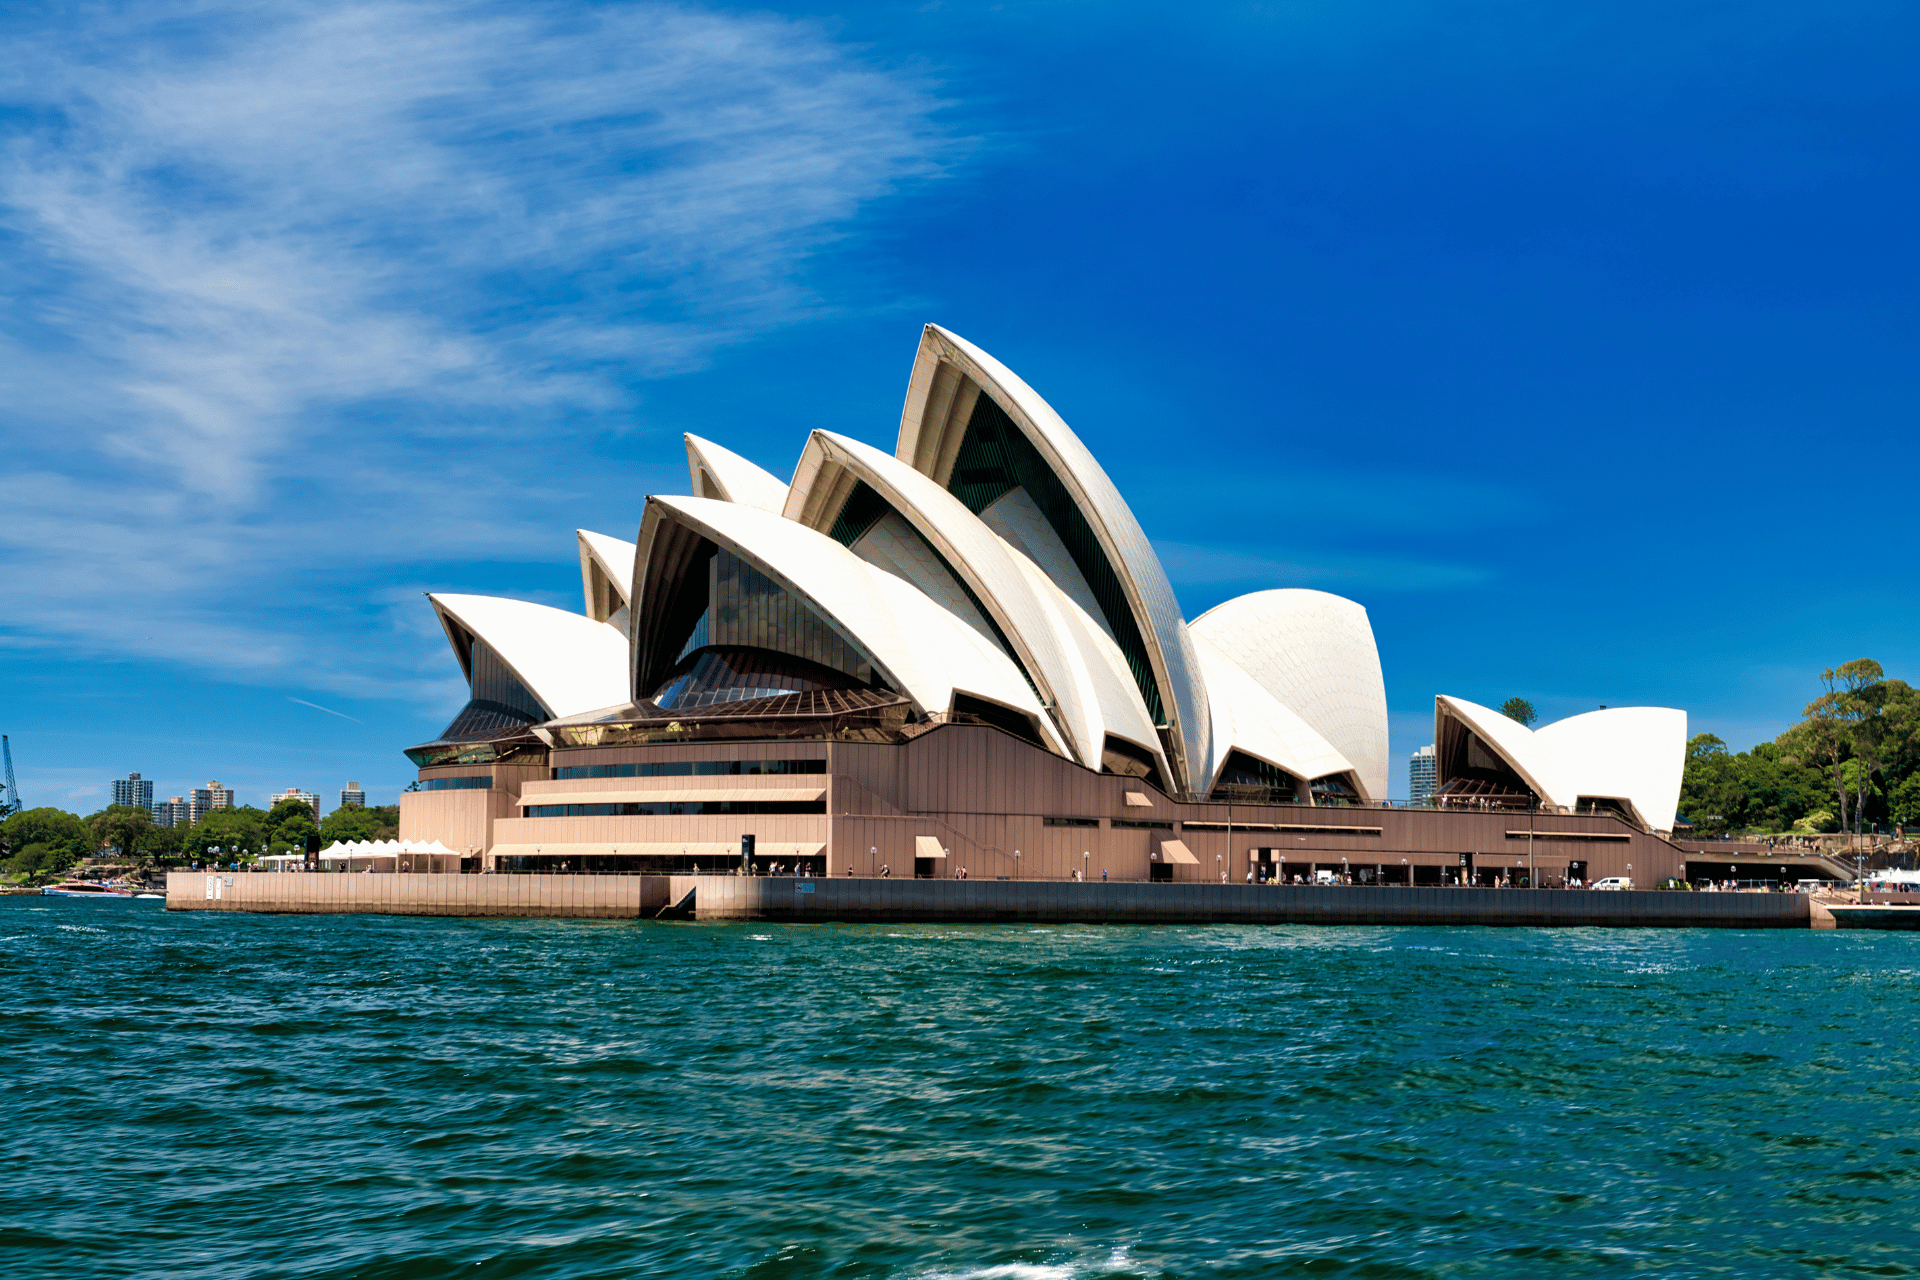 Book a day trip in Sydney